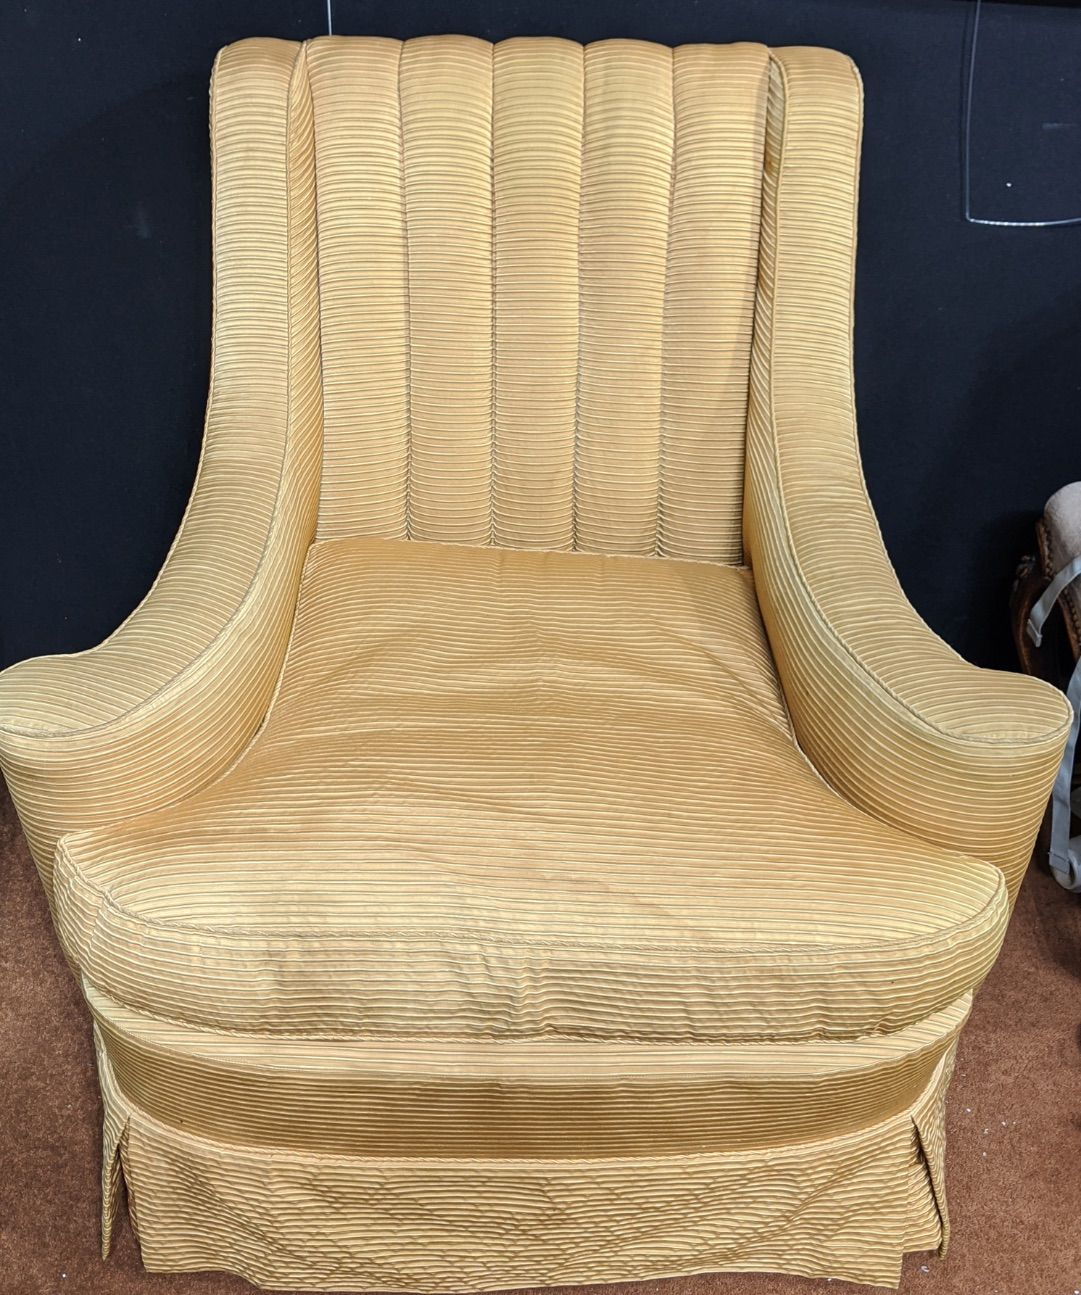 Null 霍华德椅子有限公司金丝软垫扶手椅，20世纪末，底部贴有标签，椅腿上有霍华德椅子有限公司，英国伦敦的印记。

出处。伦敦佳士得，拍卖会5795，拍品2